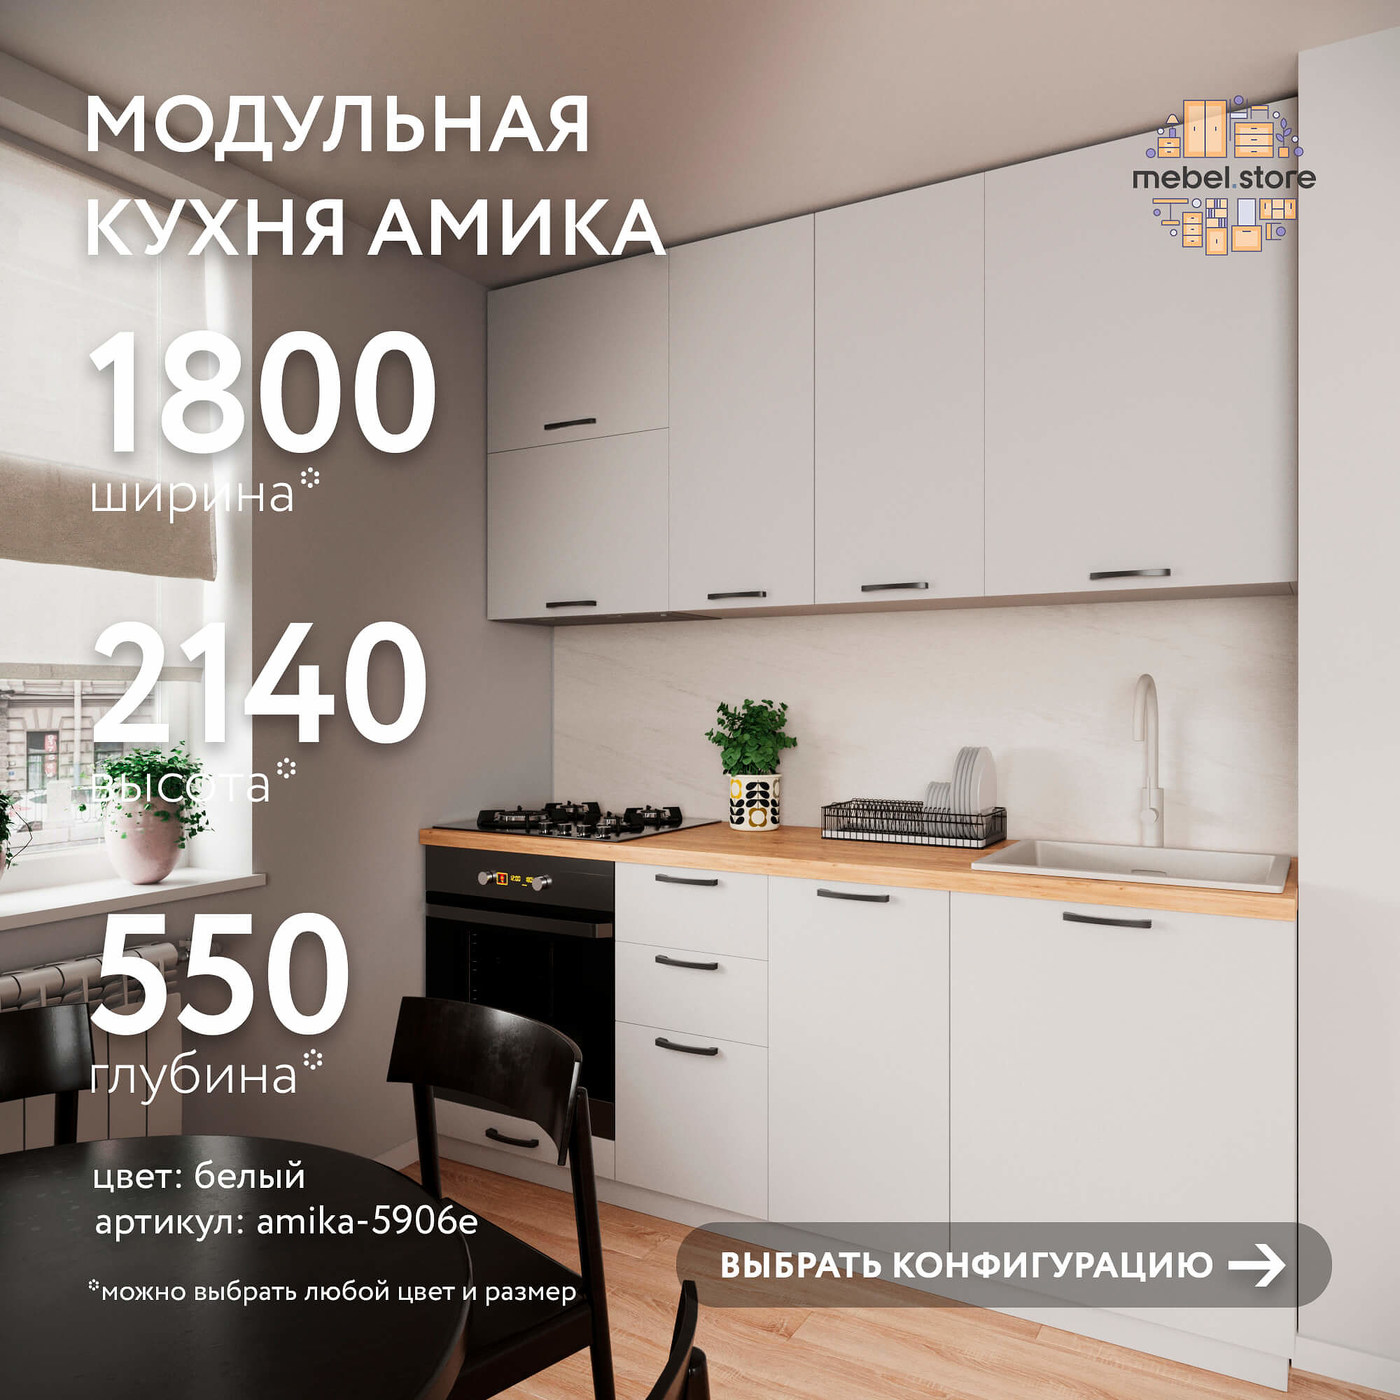 Модульная кухня Амика-5906e минимализм гарнитур - фото 1 large